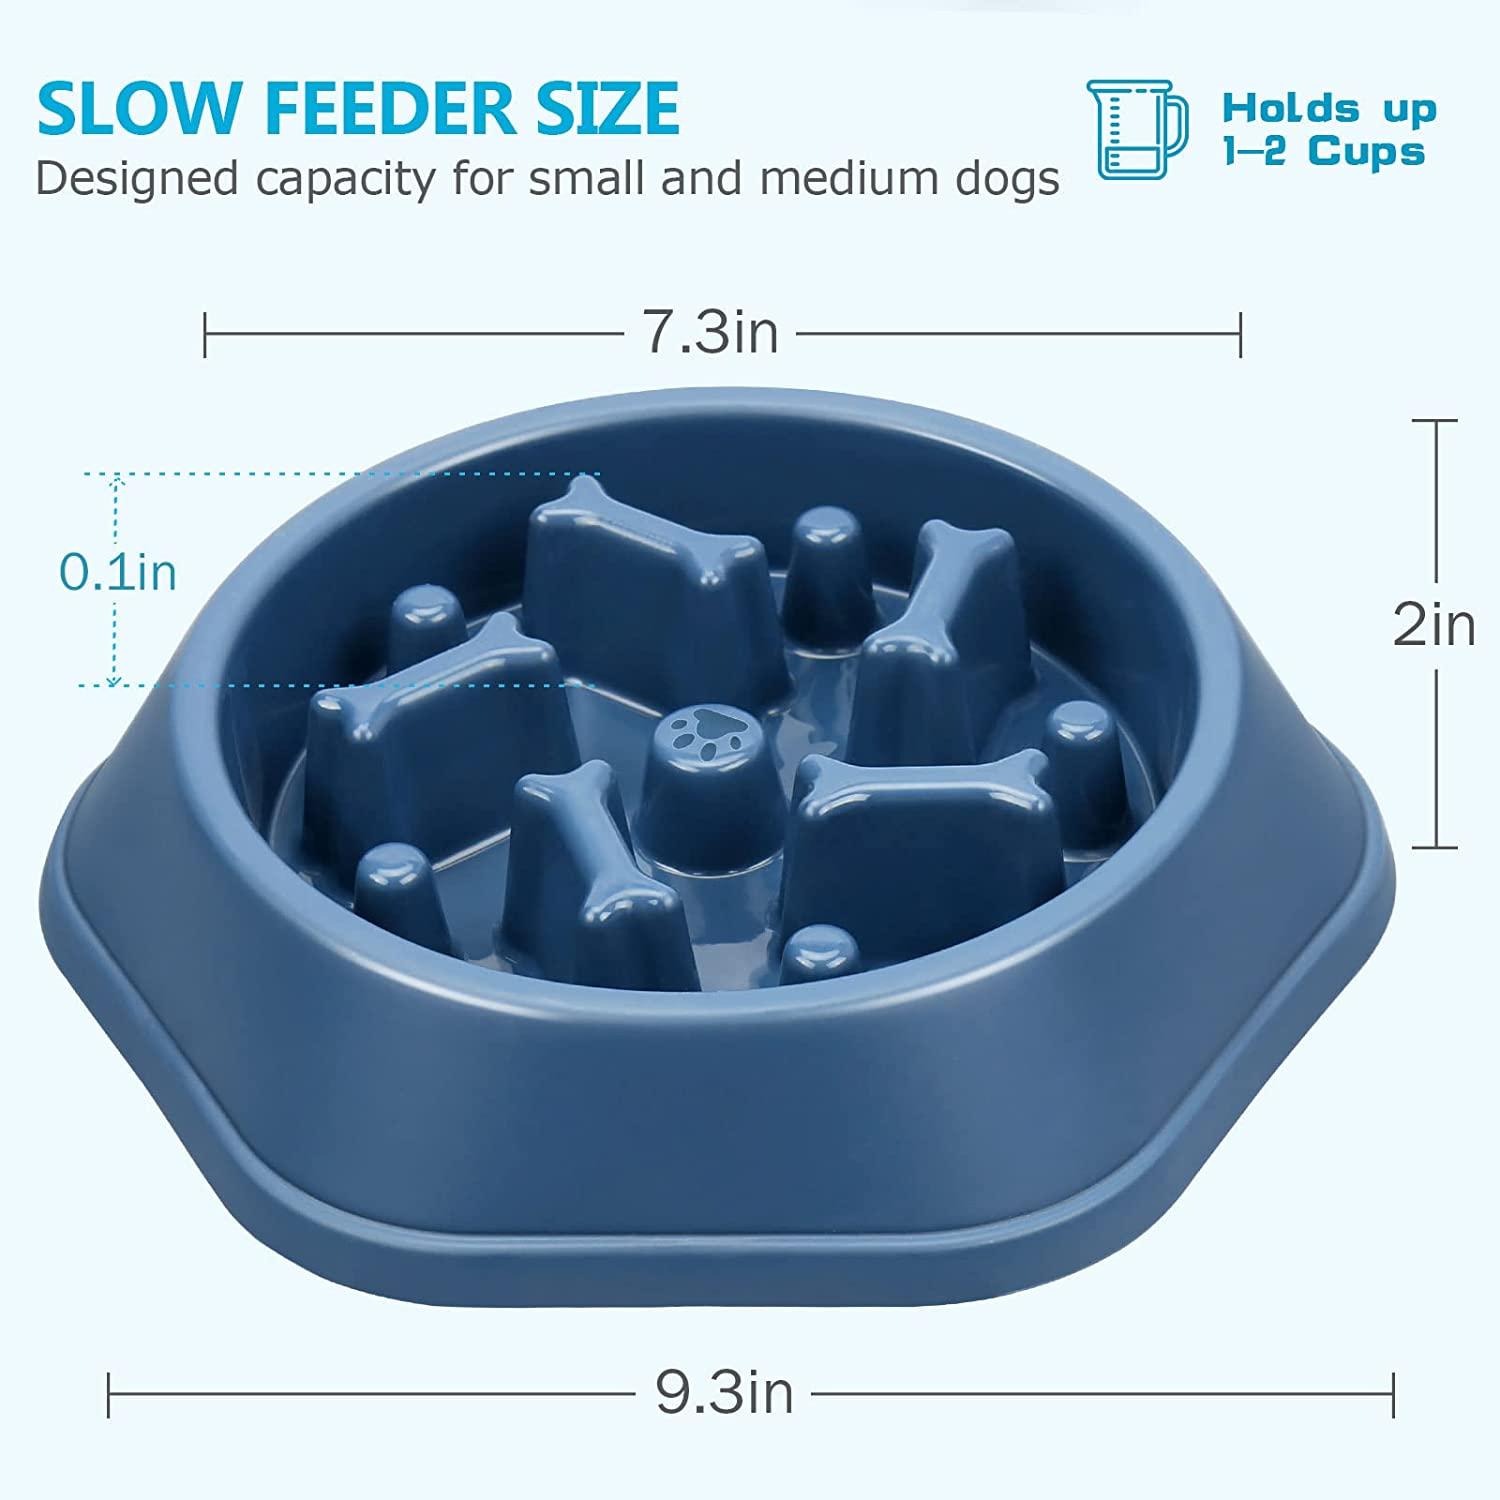 UPSKY Slow Feeder Dog Bowls Anti-Chocking Slower Feeding Dog